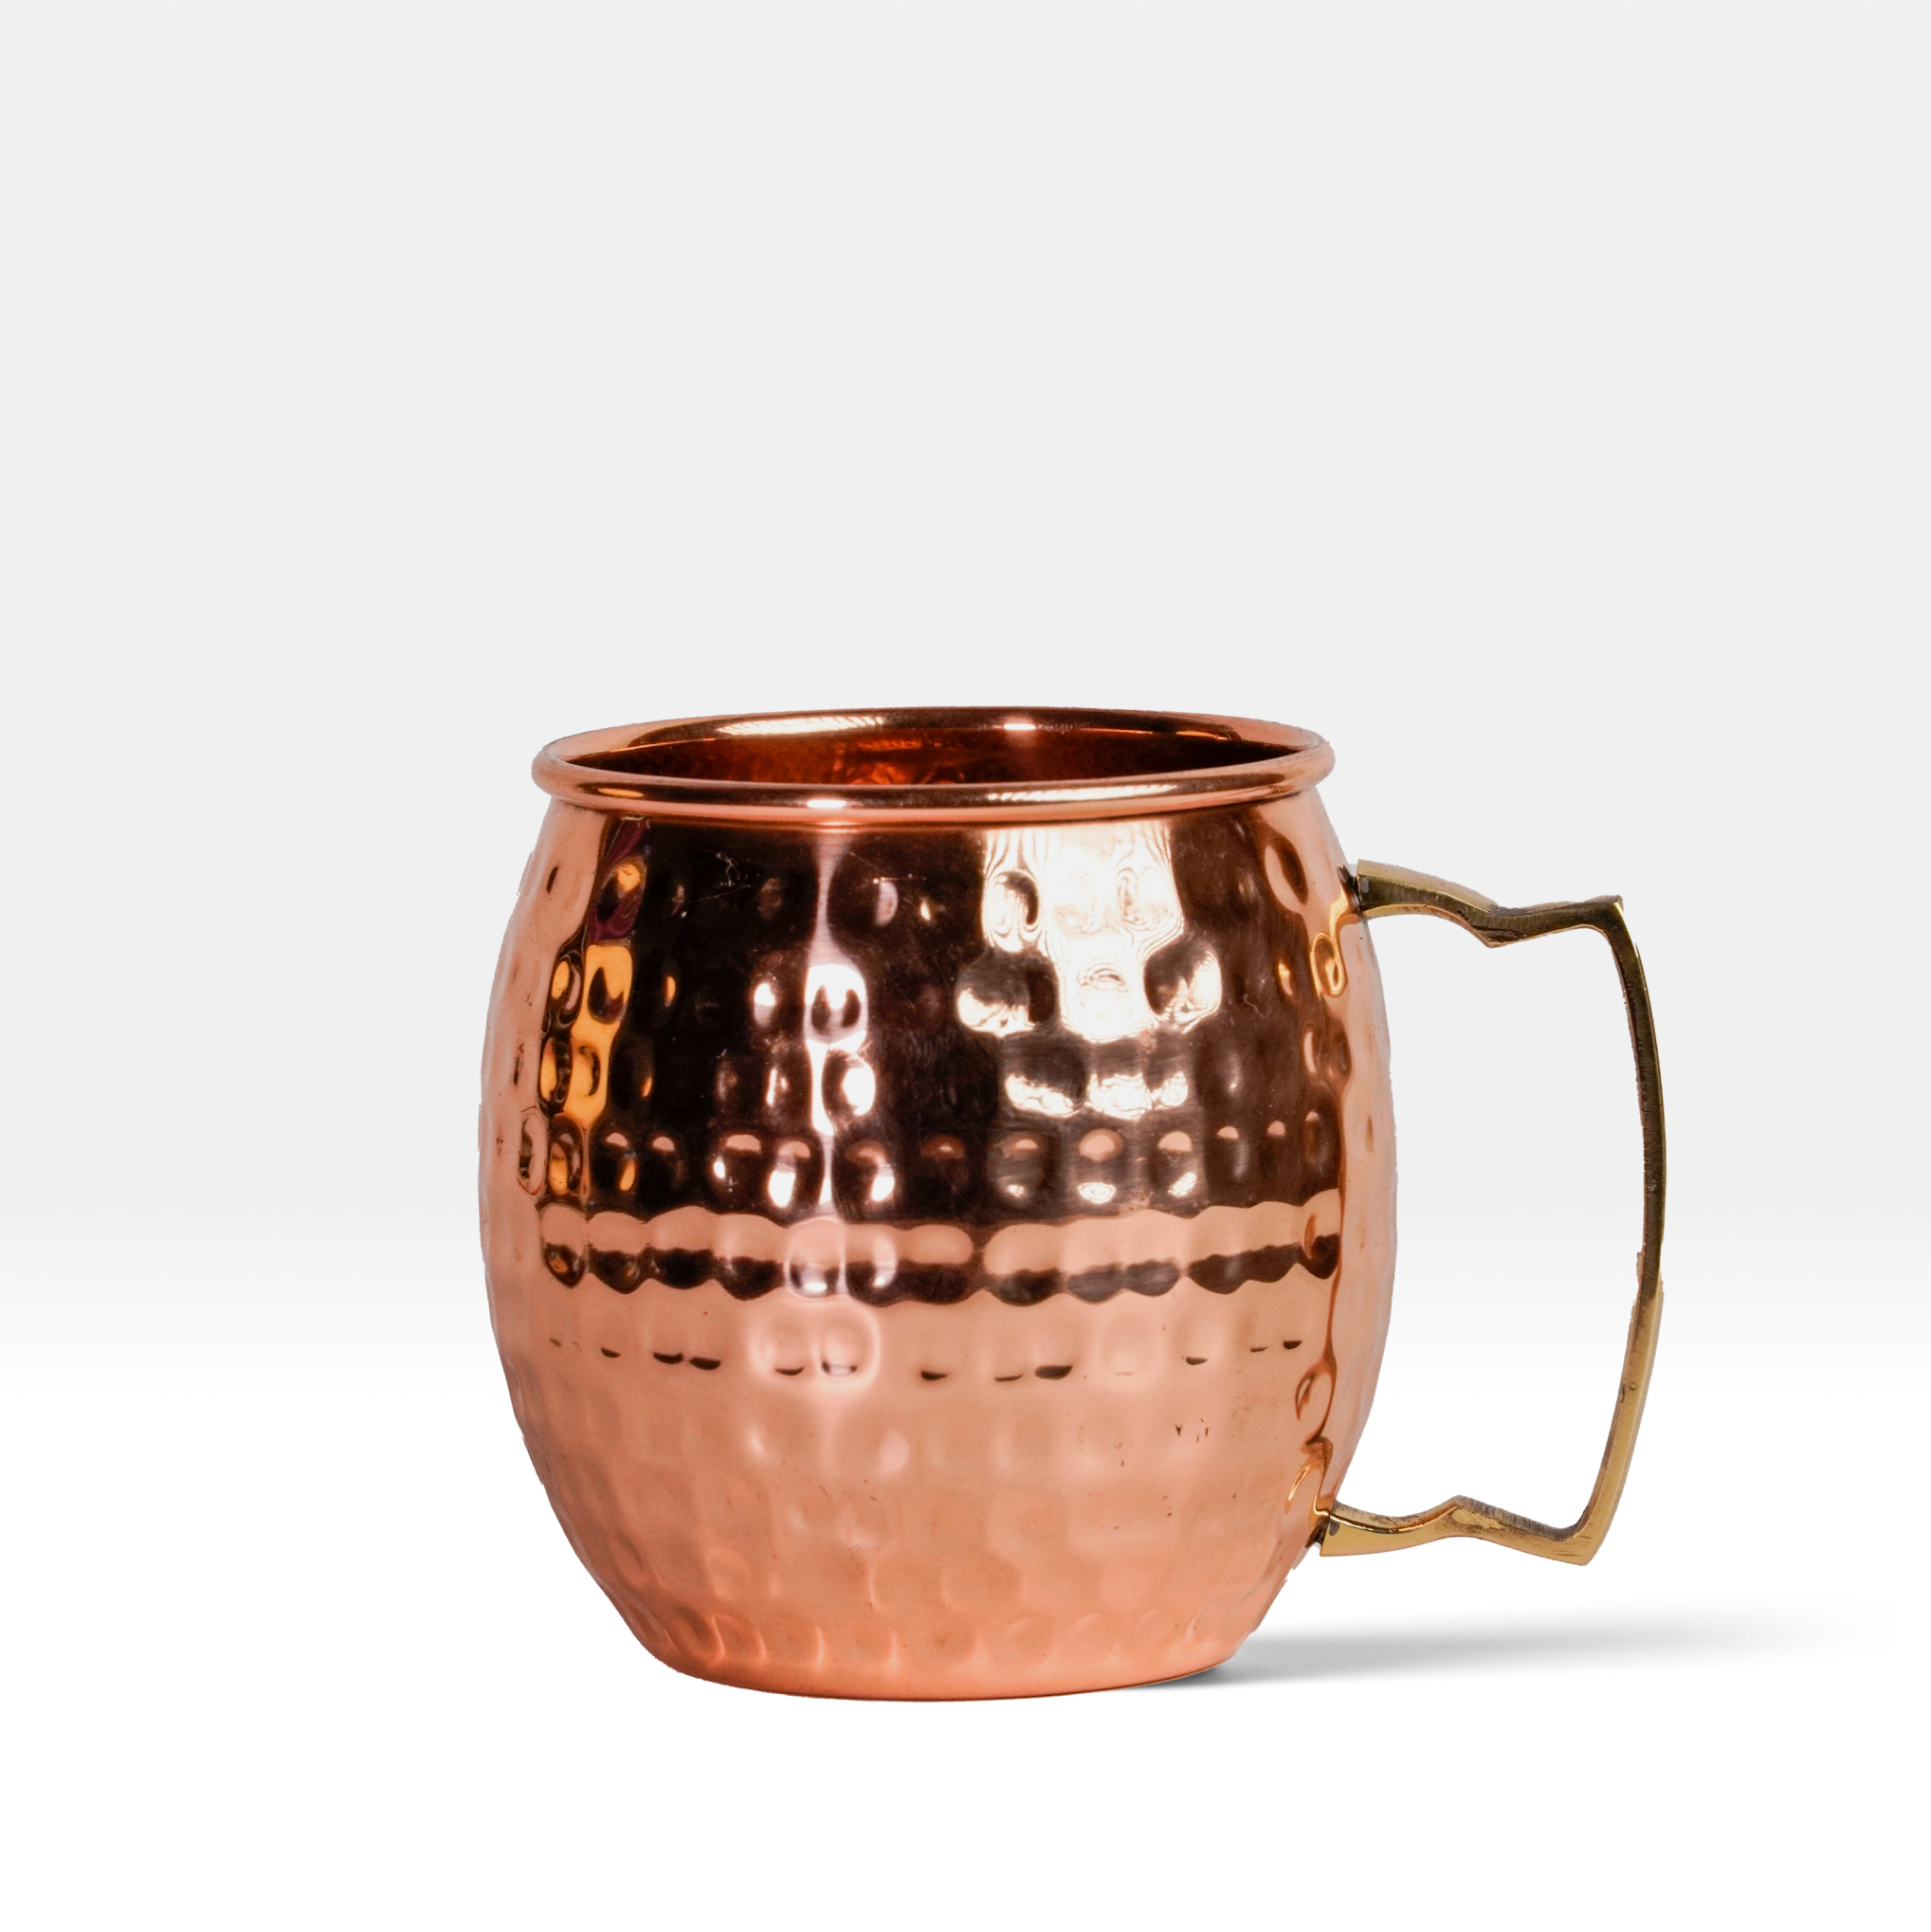 Buy Ecotyl Copper Mug - 450 ml at Best Price Online